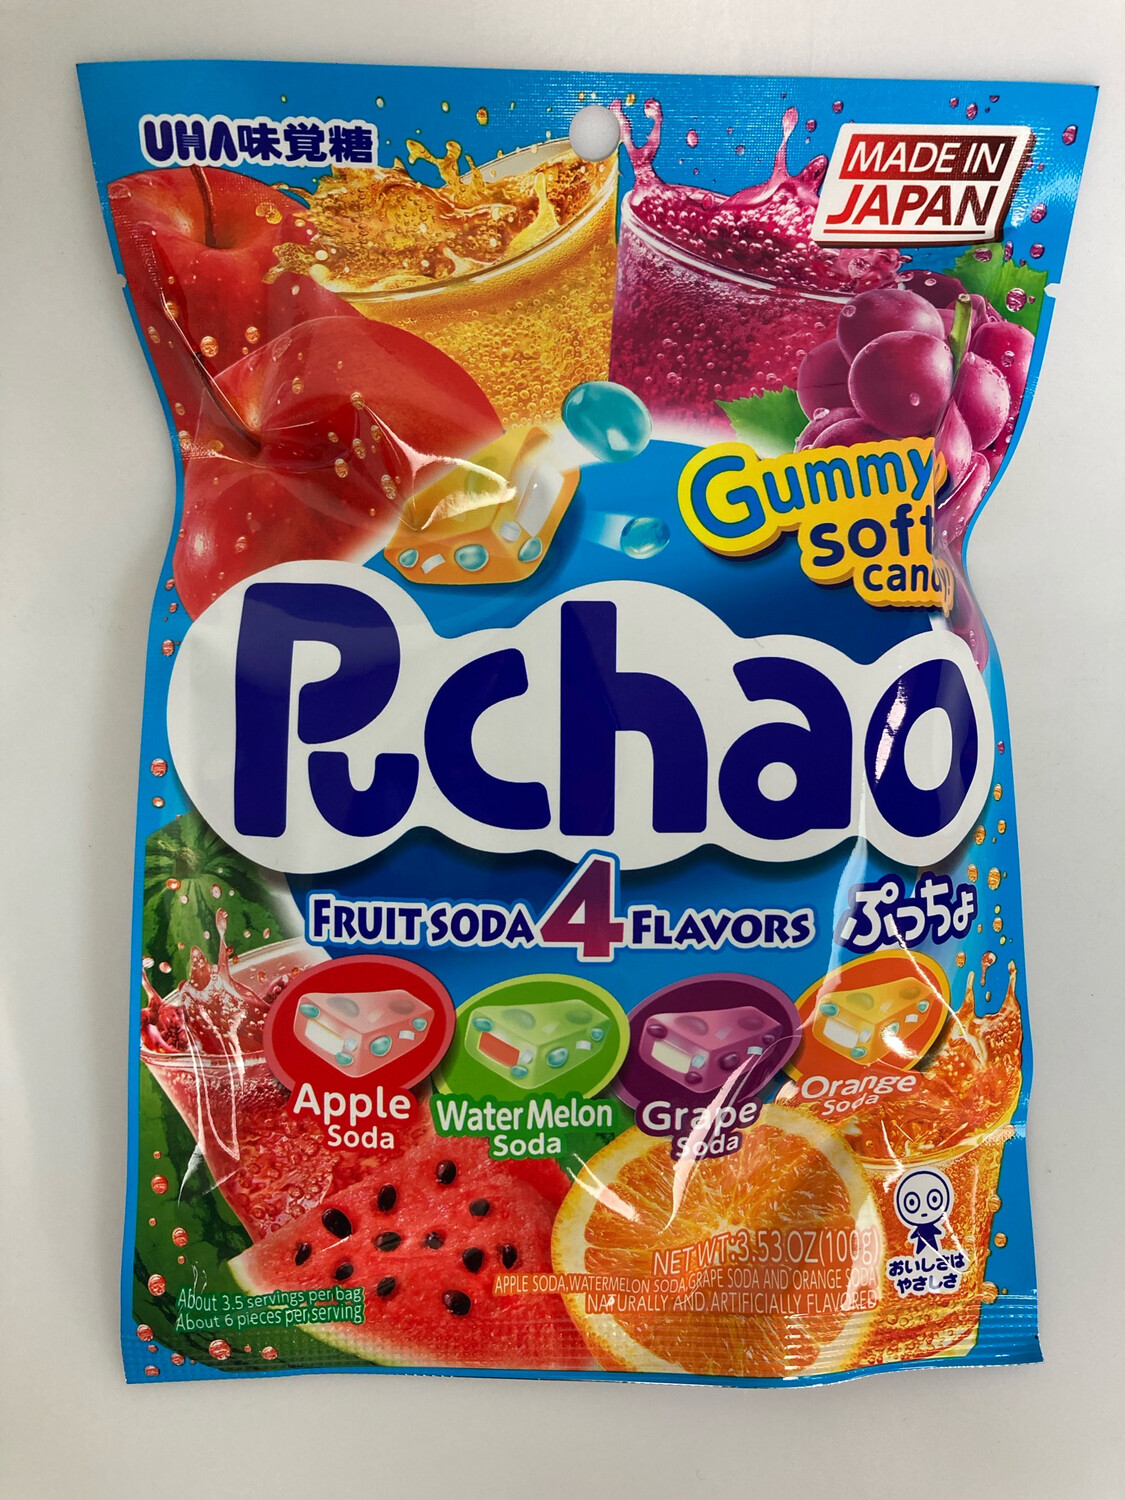 UHA Puchao Soft Chewy Candy with Gummy Bits, 4 Fruit Soda Flavors with Apple, Watermelon, Grape, and Orange 日本进口味觉软糖 （4种水果苏打水口味：苹果、西瓜、葡萄和橙子）